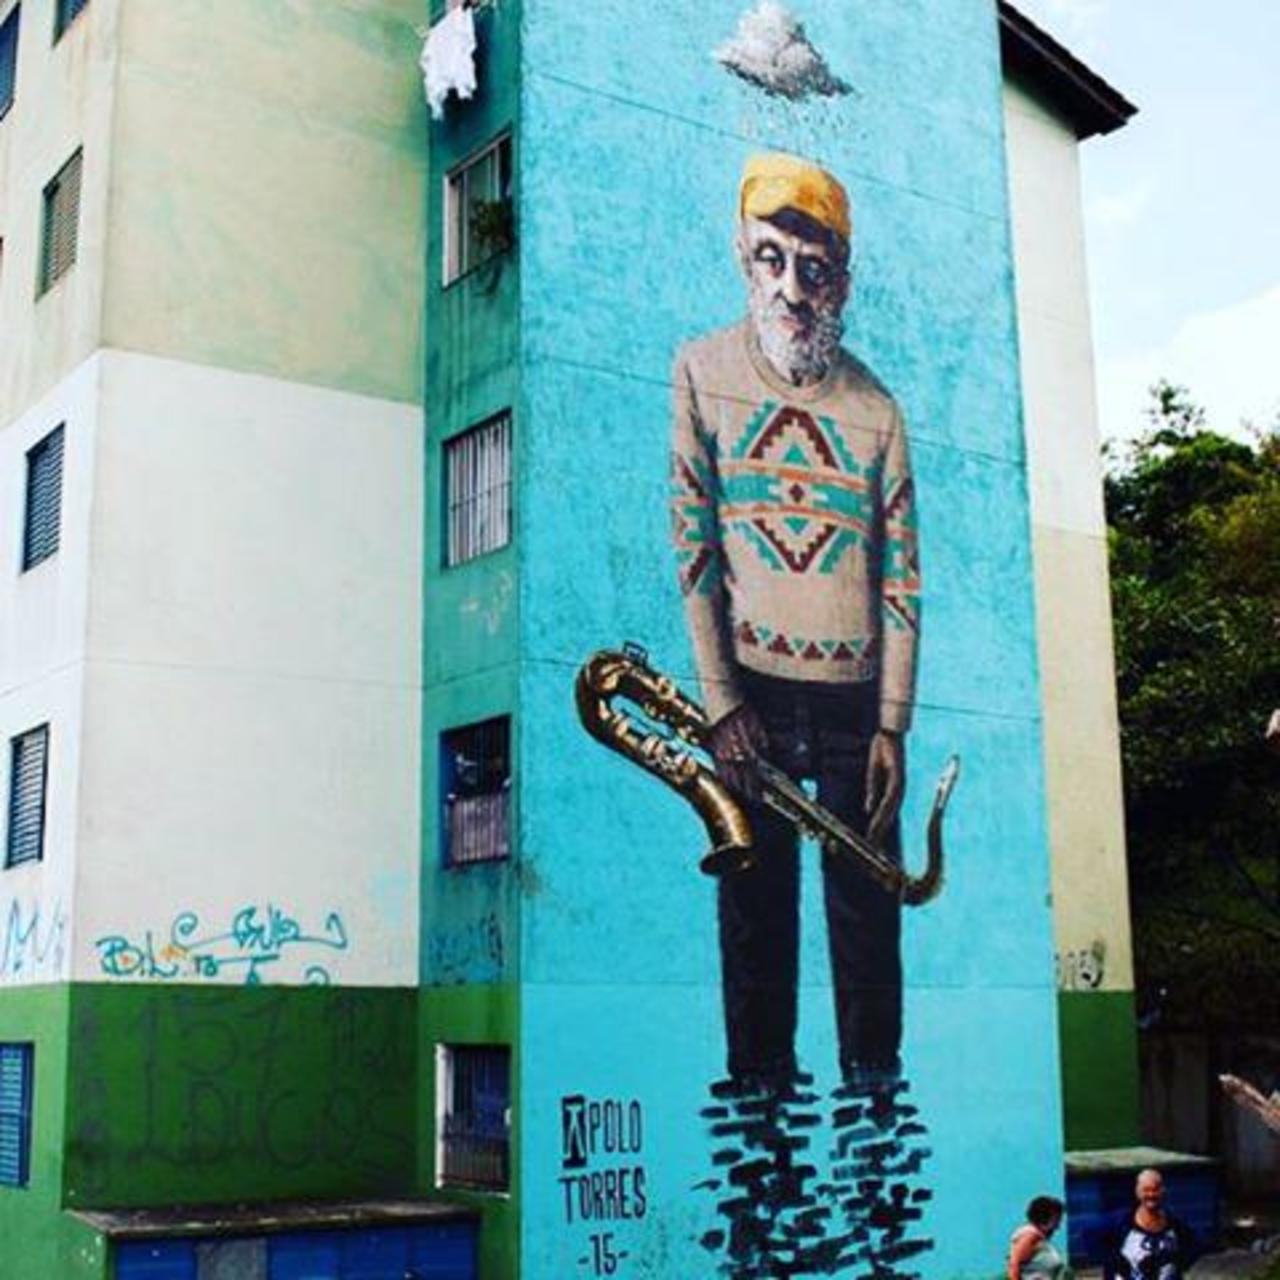 Apolo Torres #artist #urbanwalls #urbanart #streetart #graffiti... #InspireArt - - http://wp.me/p6qjkV-4nv http://t.co/JhbD0Cdl0d